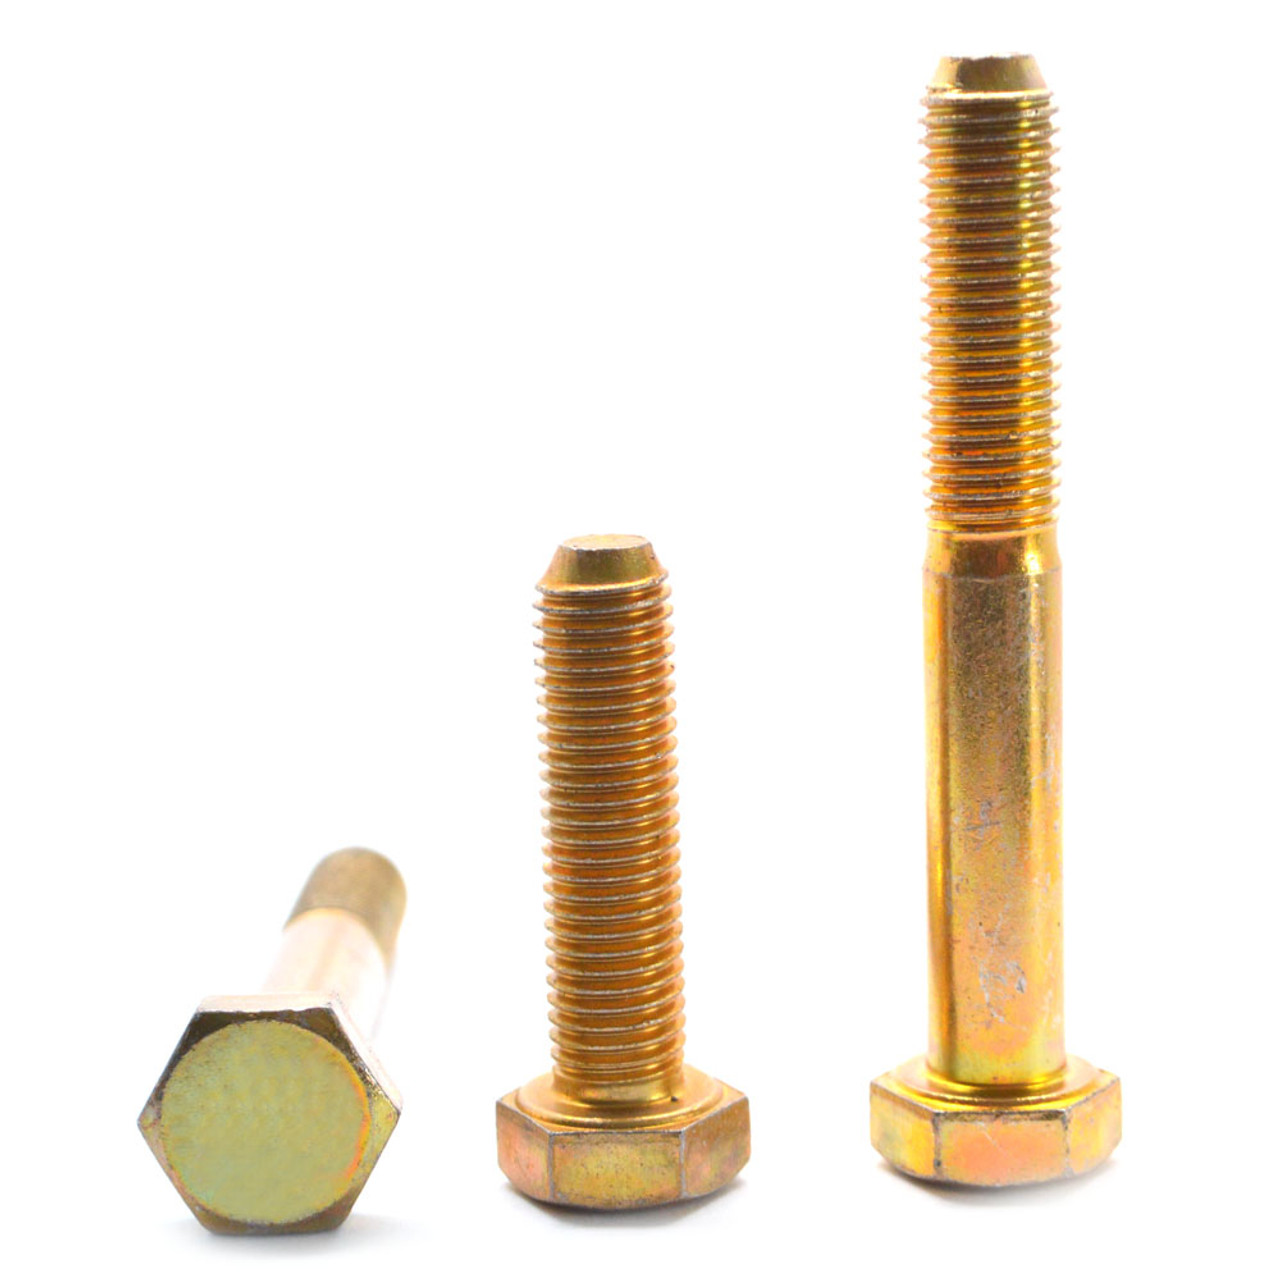 M10 x 1.50 x 40 Coarse Thread DIN 931 Class 10.9 Hex Cap Screw (Bolt) Alloy Steel Yellow Zinc Plated